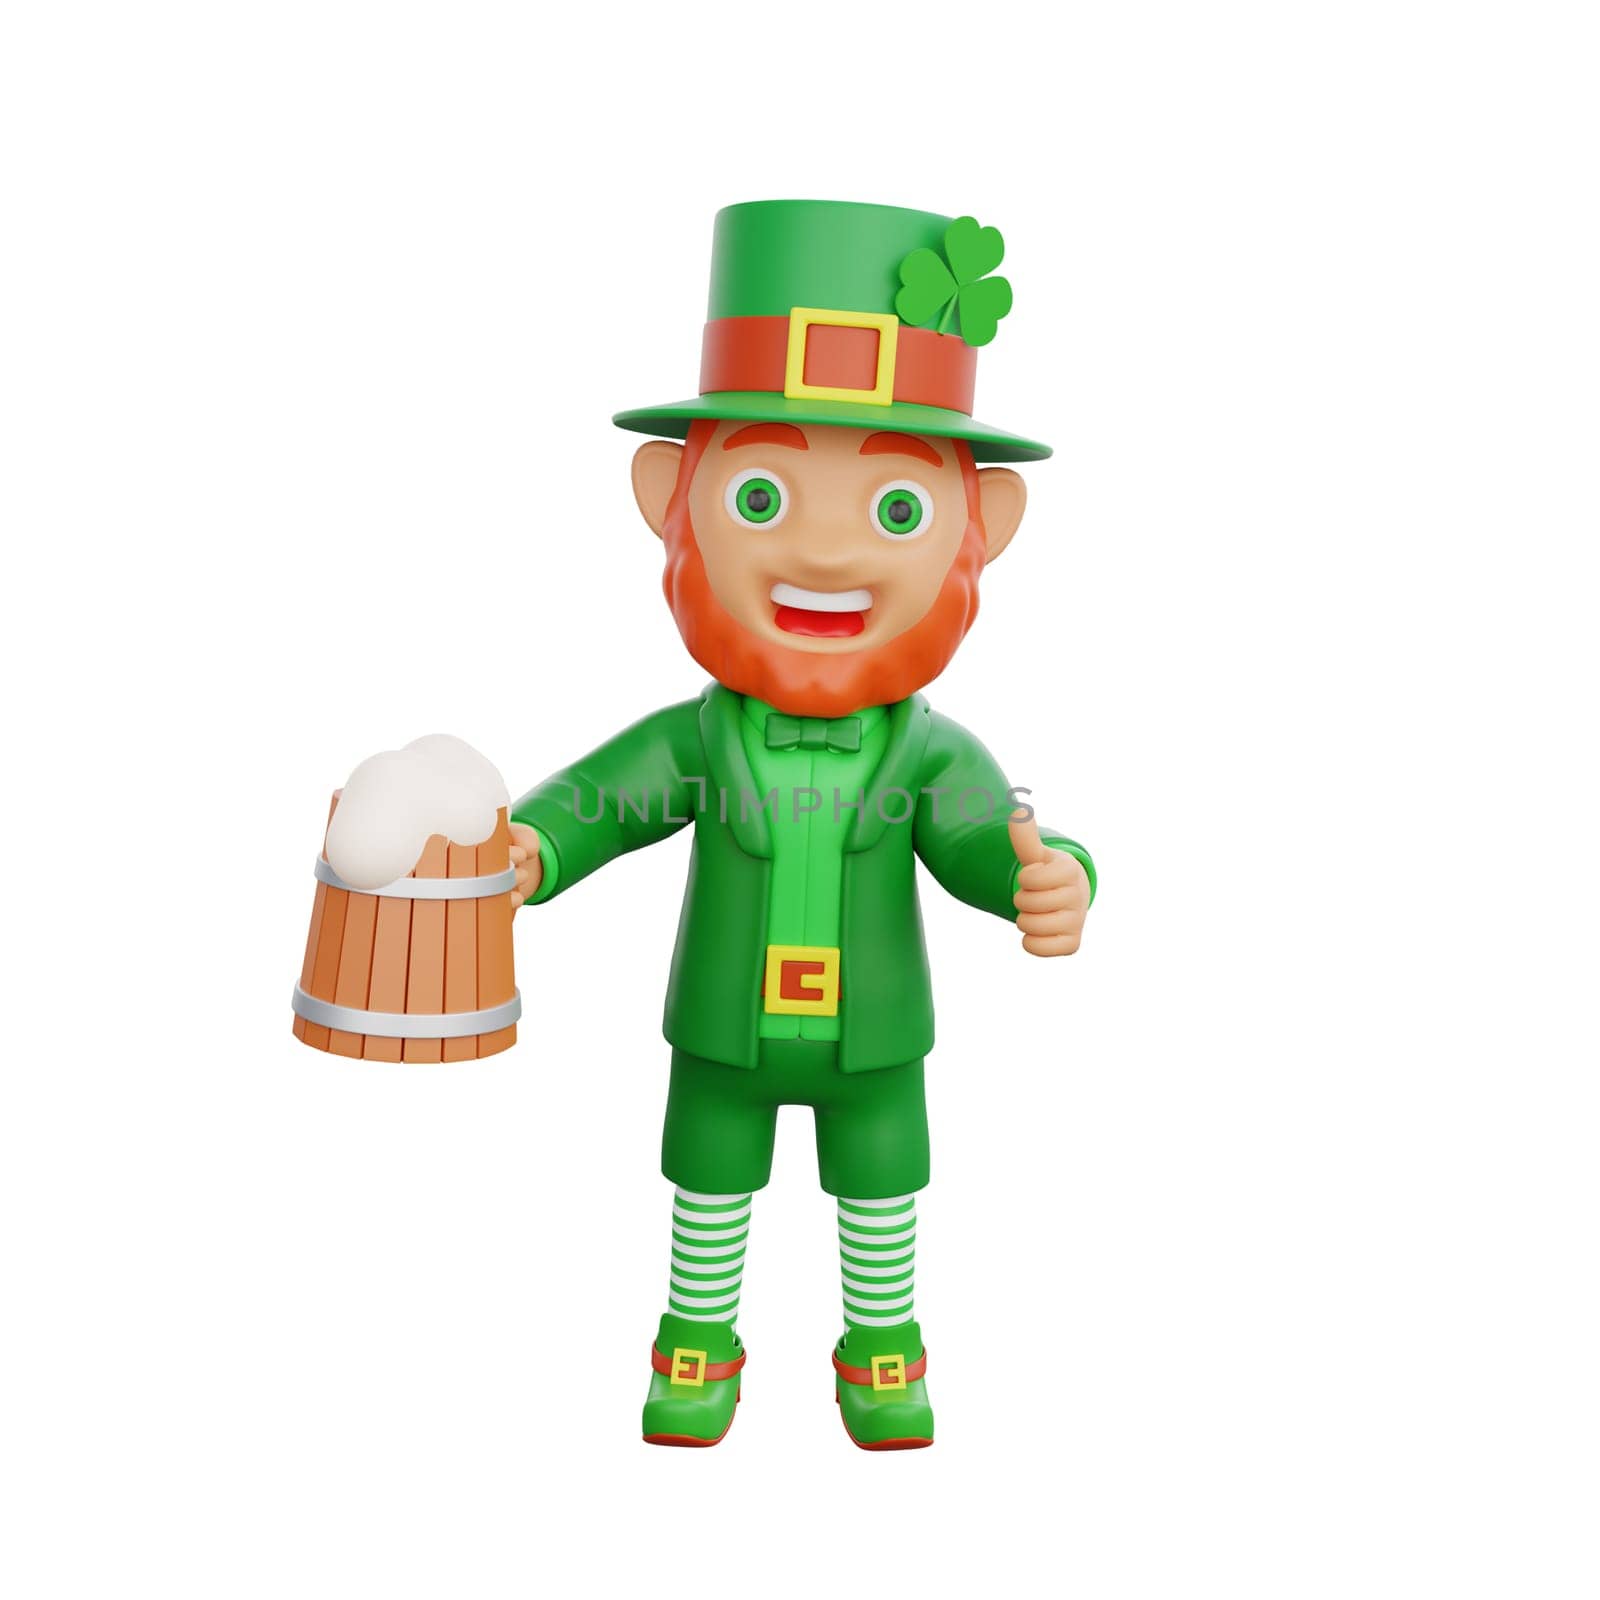 3D illustration of St. Patrick's Day character leprechaun holding wooden mugs of beer by Rahmat_Djayusman